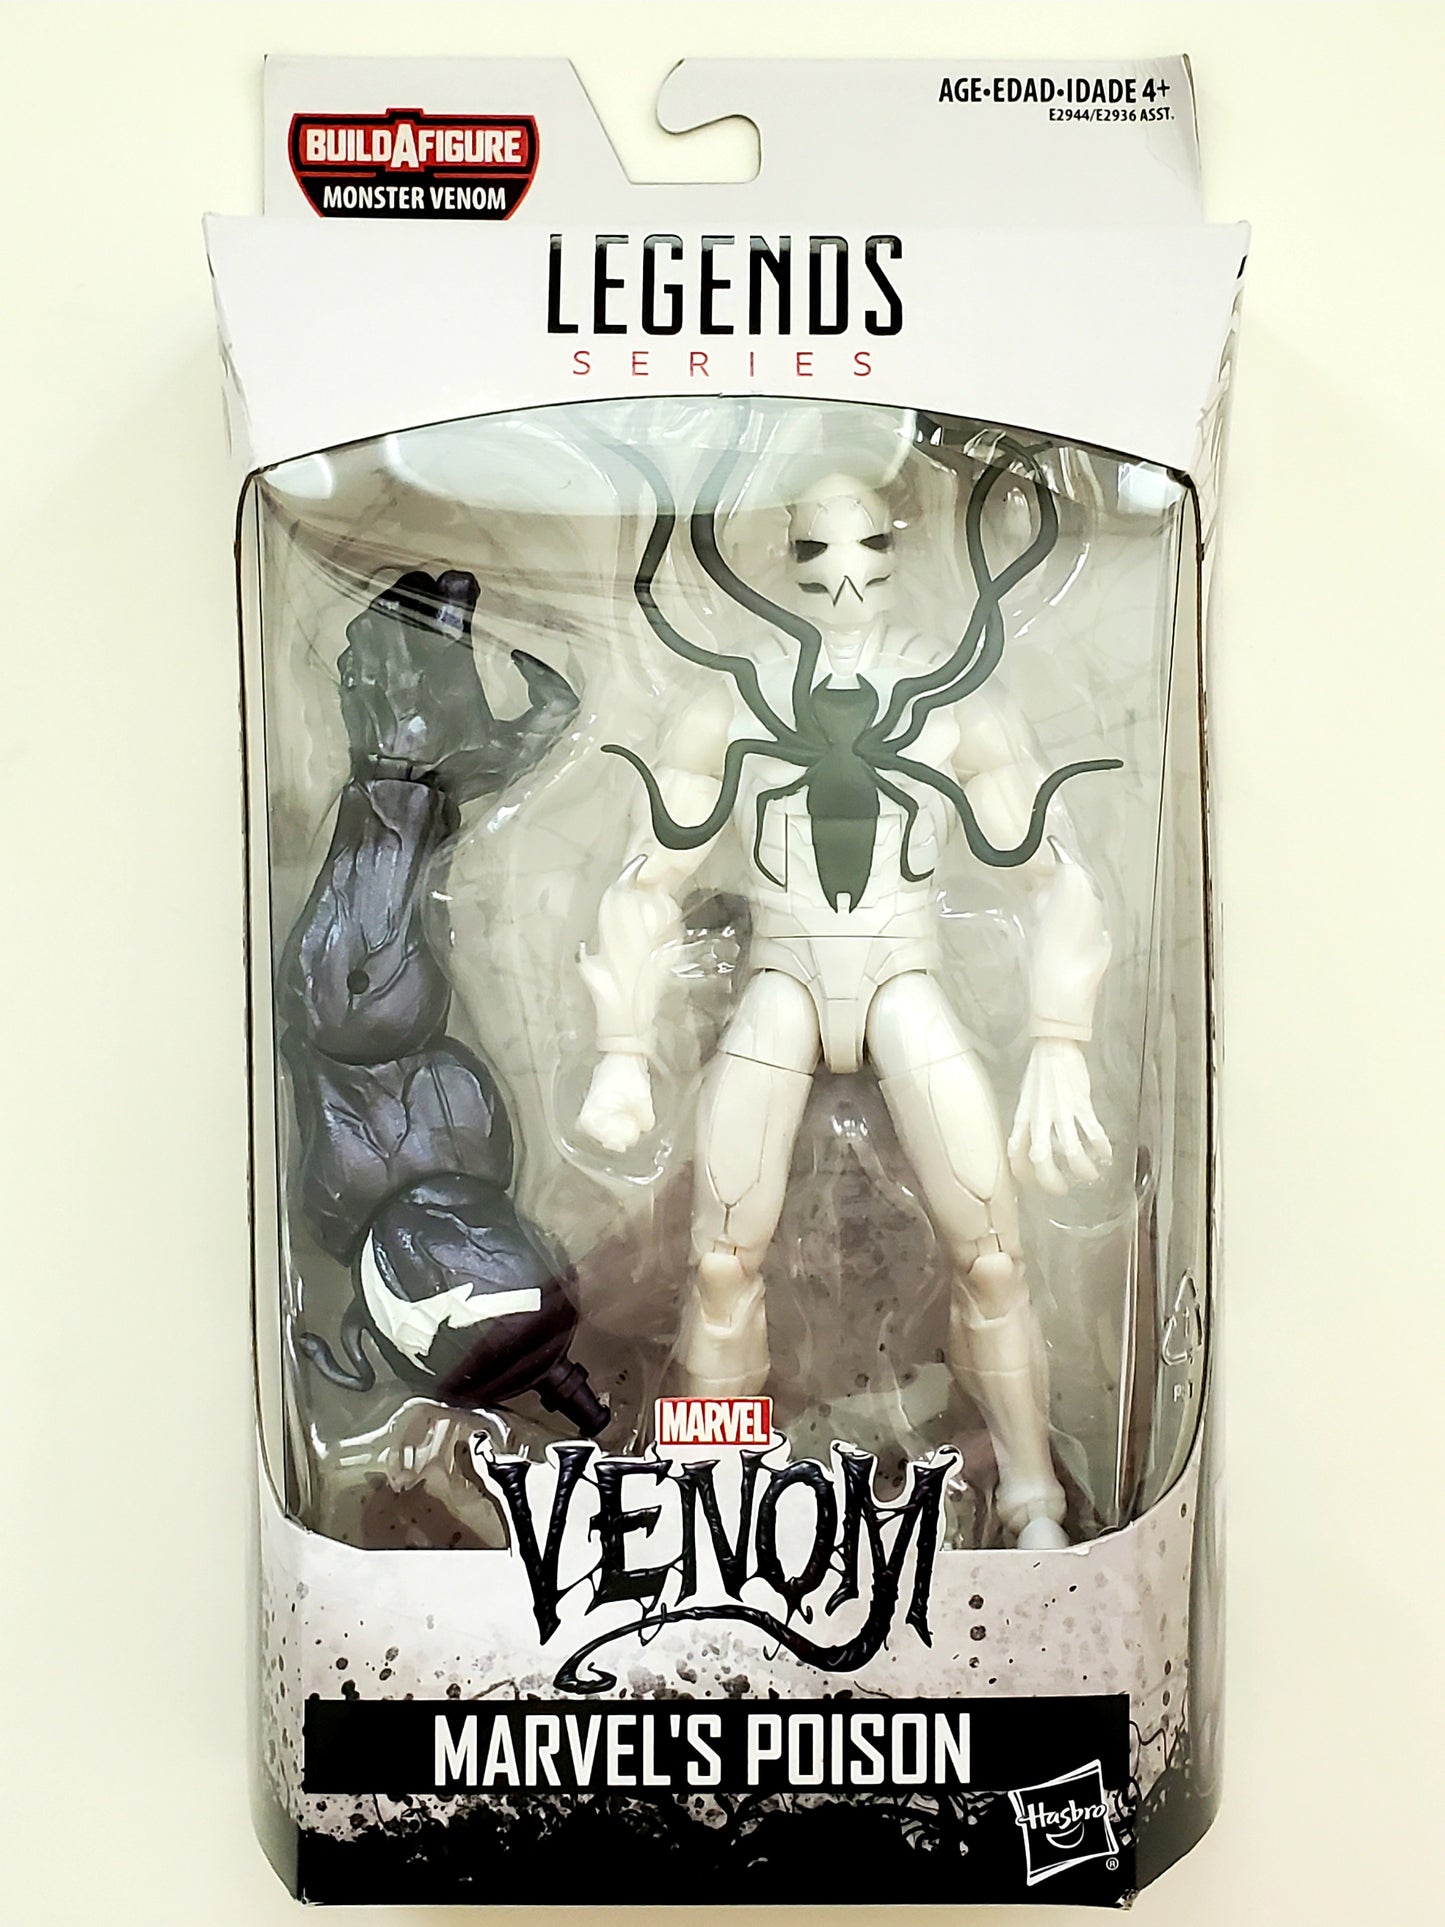 Marvel Legends Monster Venom Series Poison 6-Inch Action Figure